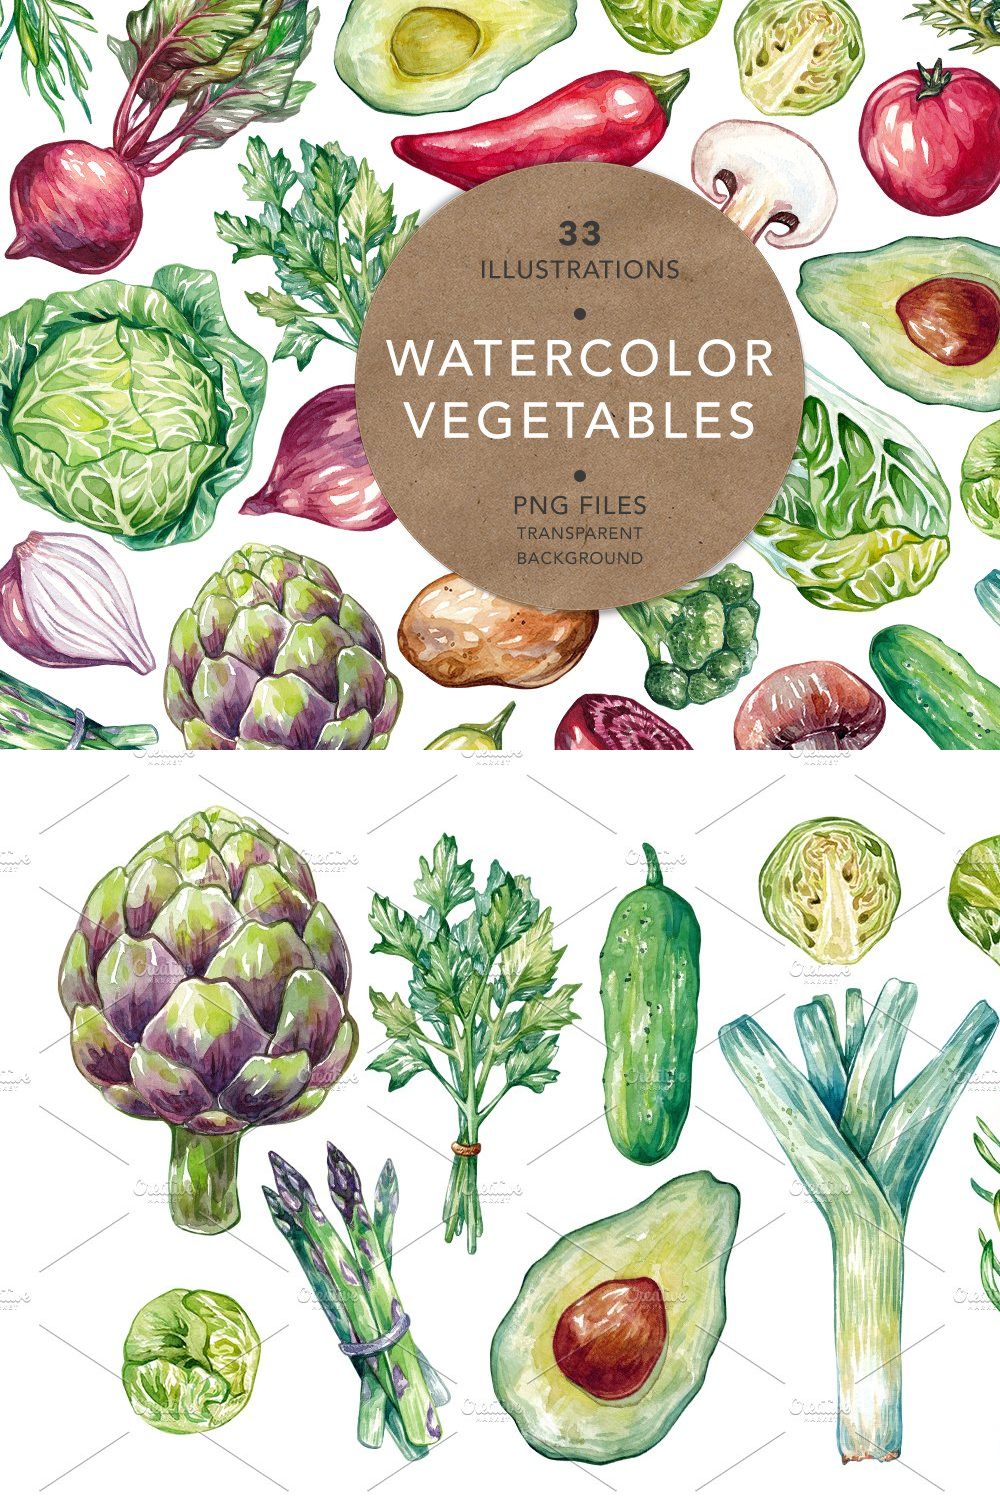 Watercolor Vegetables. pinterest preview image.